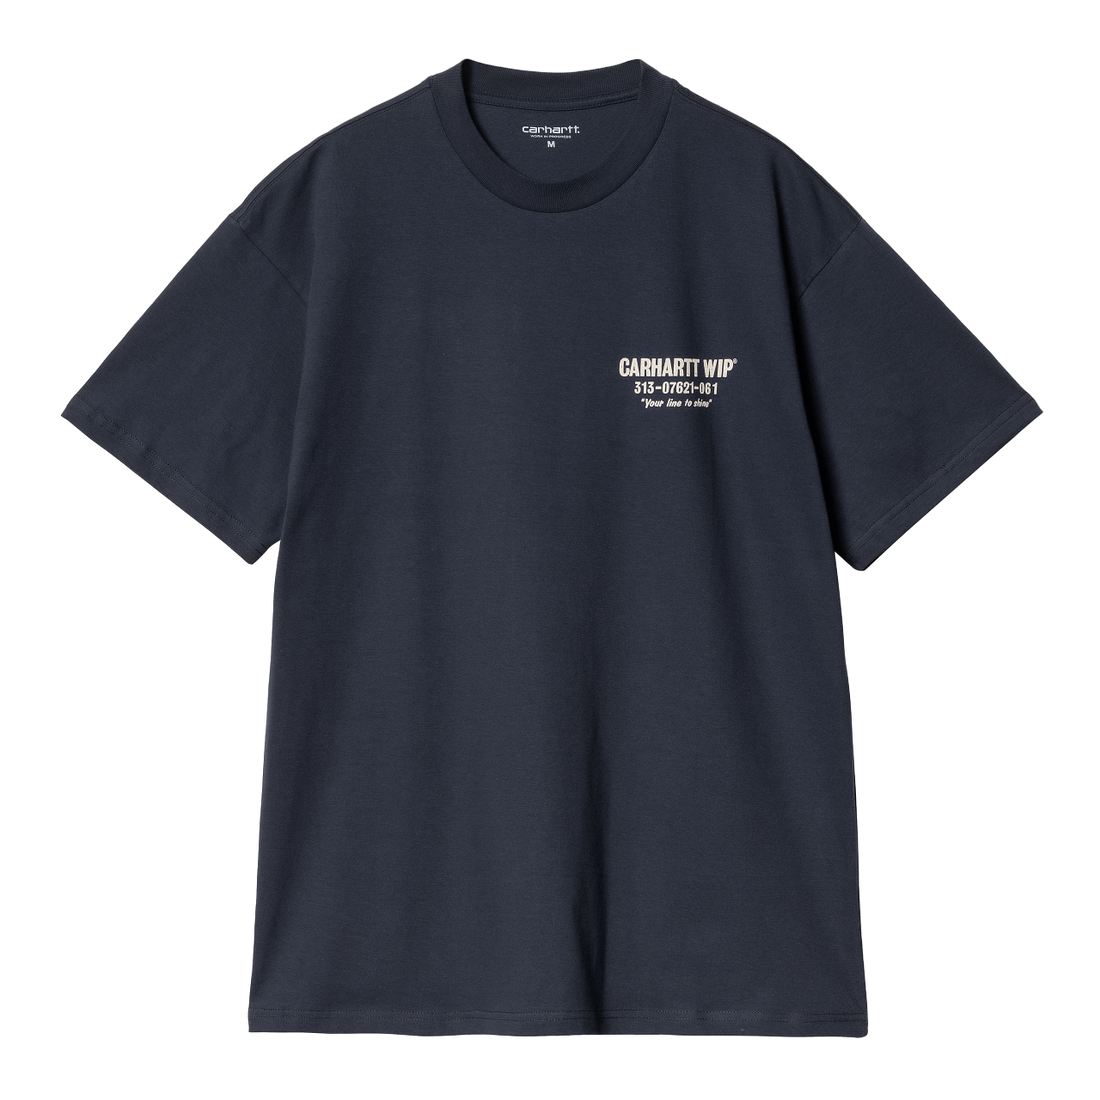 Carhartt S/S Less Troubles T-Shirt